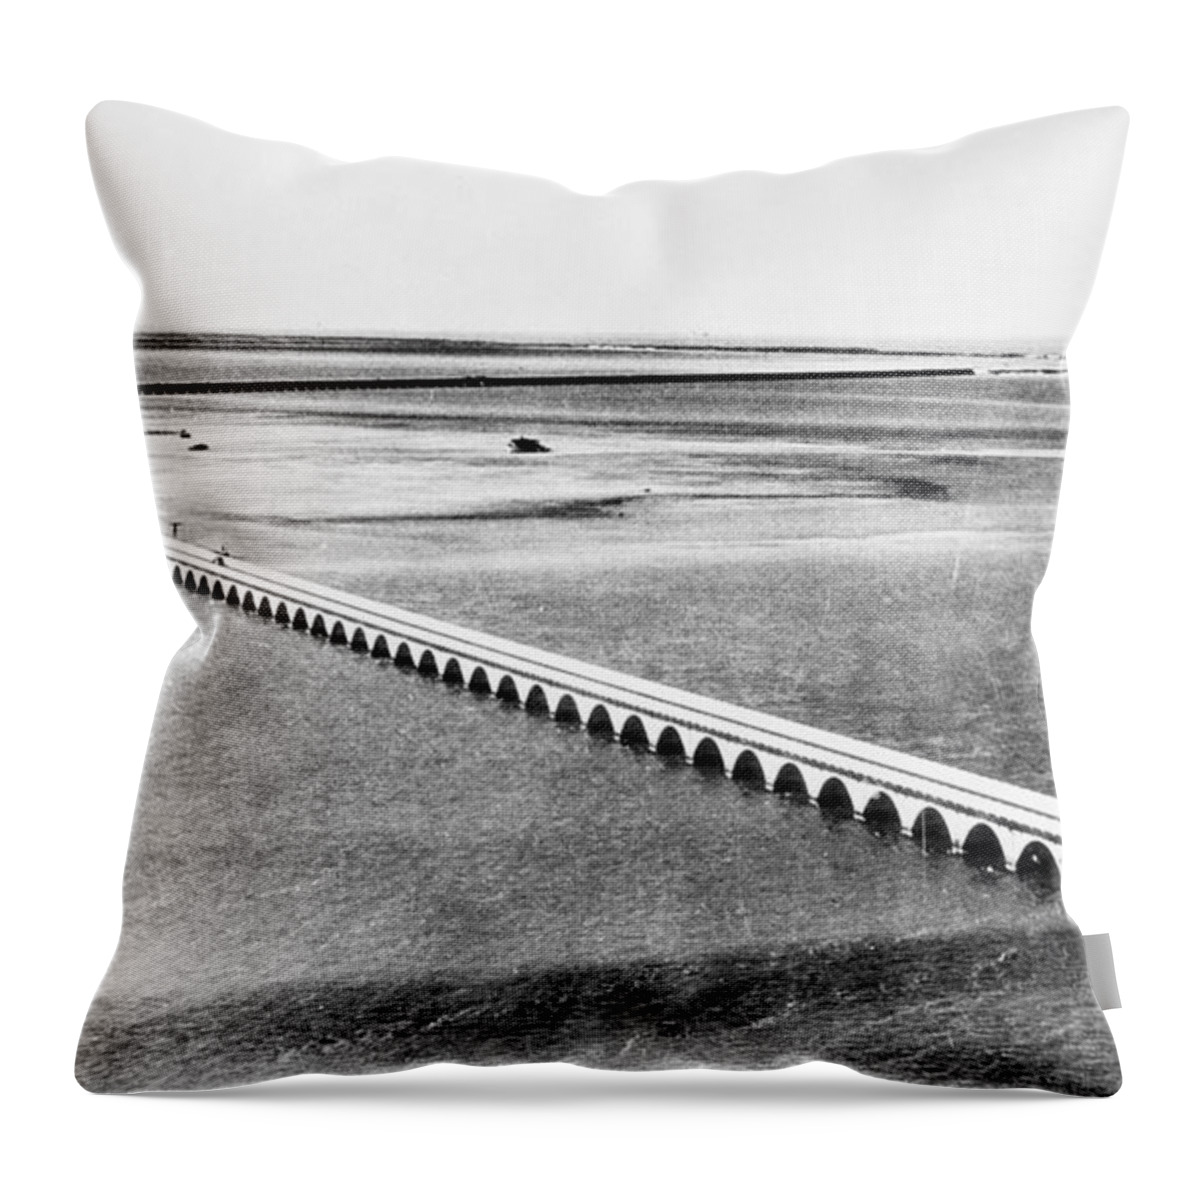 1939 Throw Pillow featuring the photograph Florida: Overseas Bridge by Granger